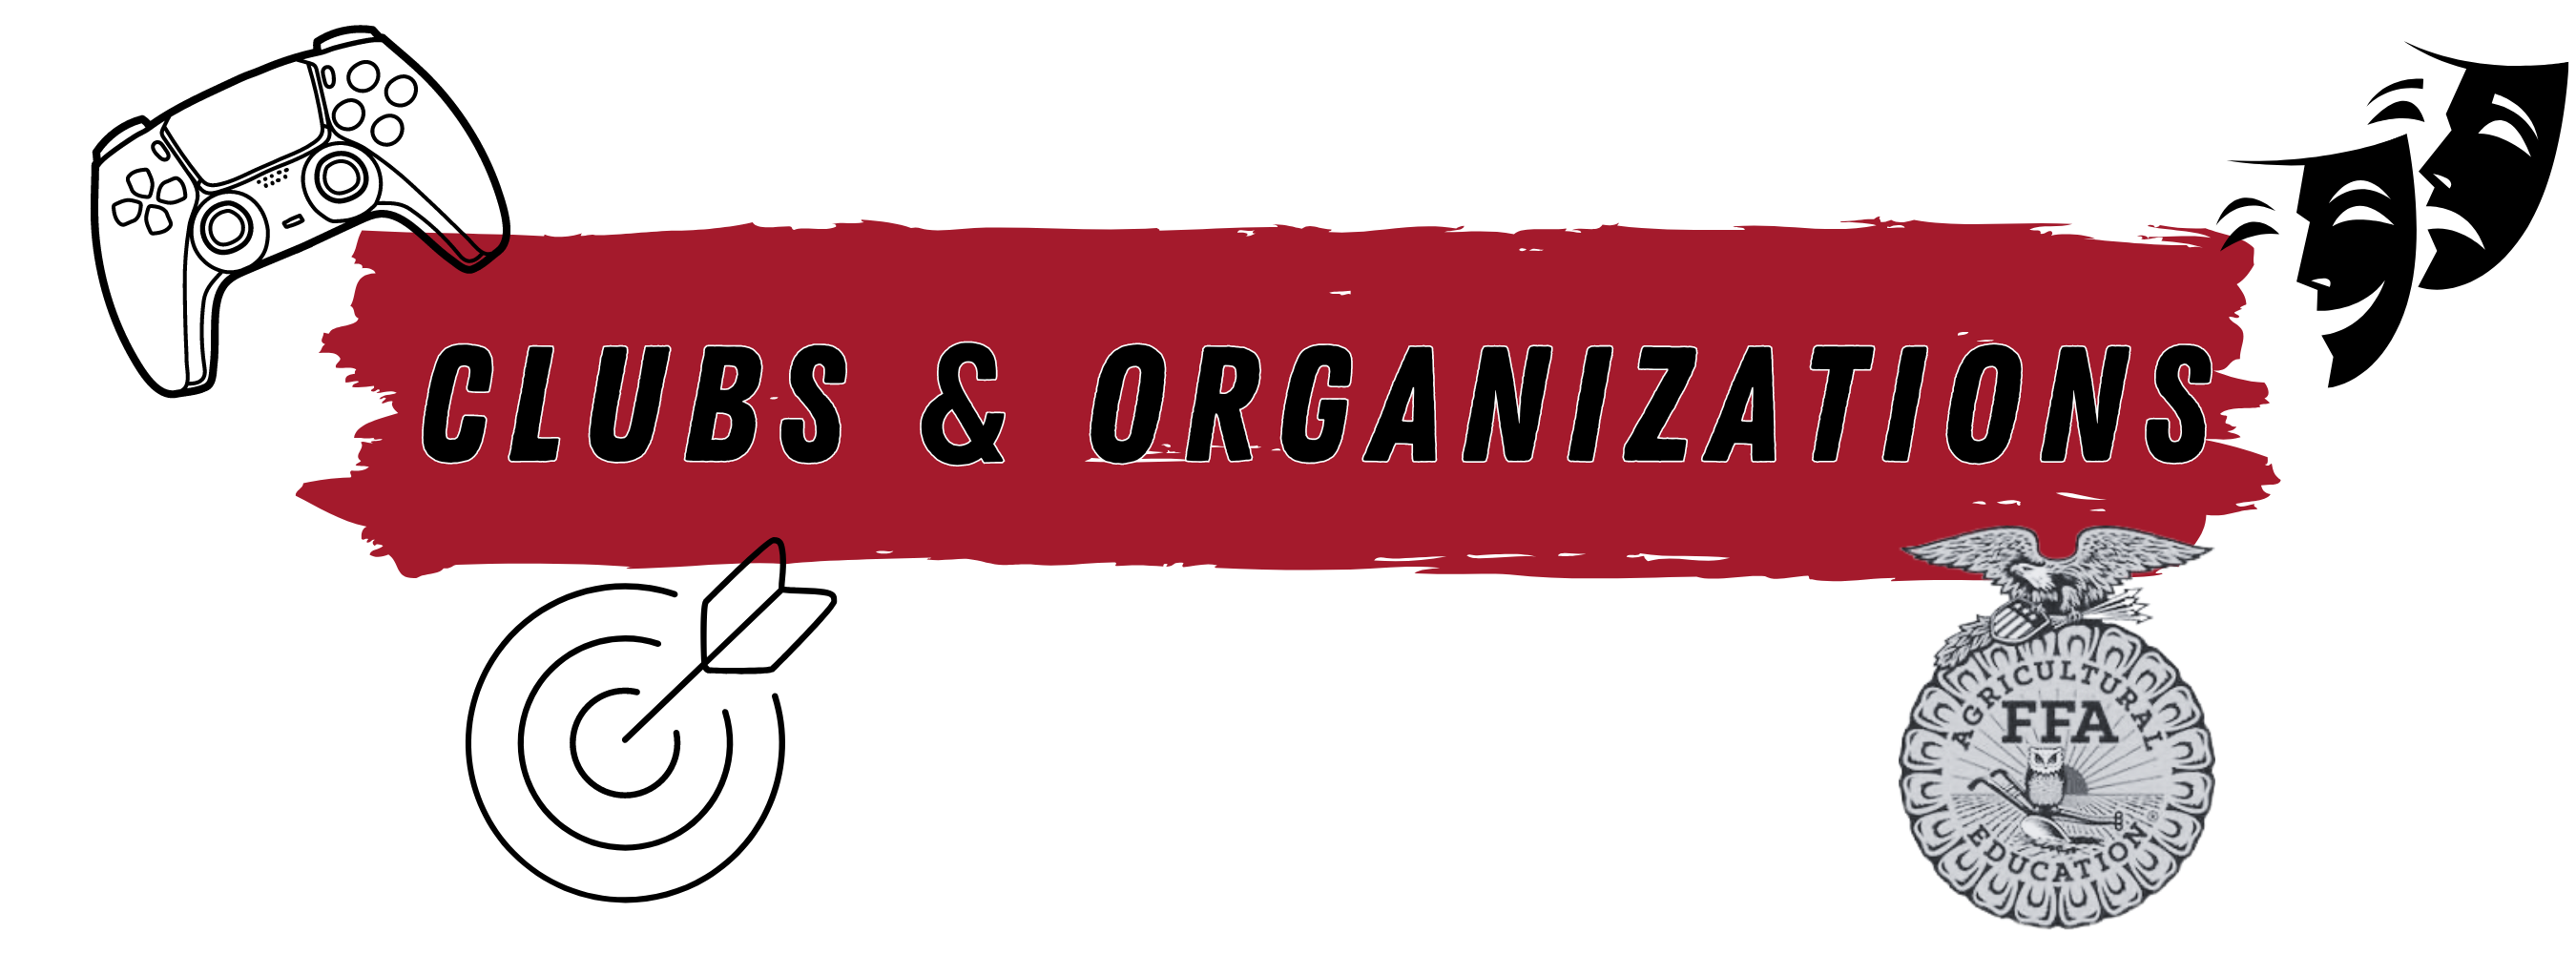 Clubs & organizations